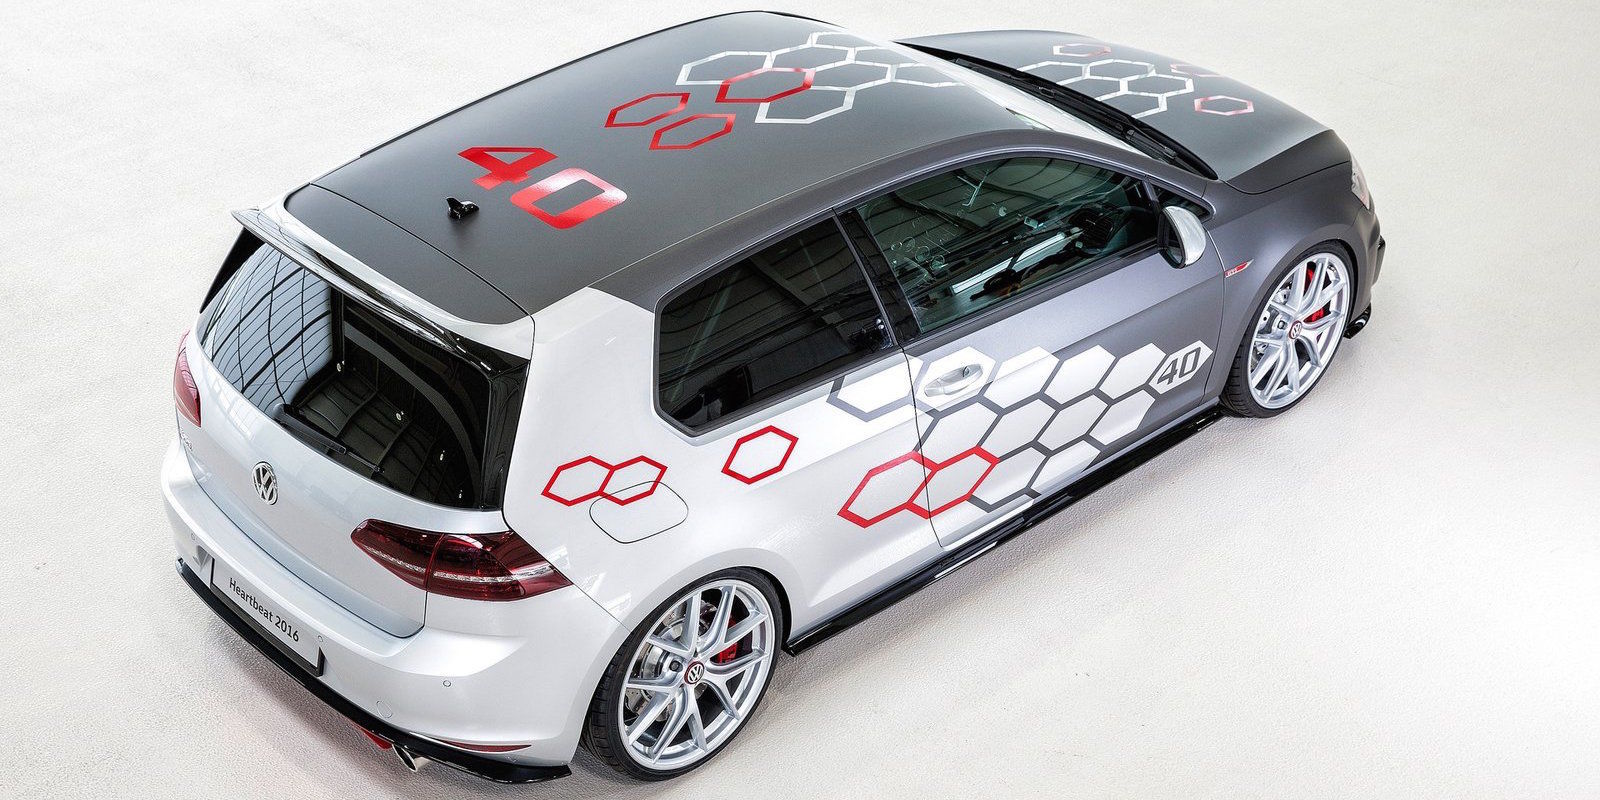 Volkswagen-2016-Golf-GTI-Heartbeat-Concept-03-autonovosti.me-3